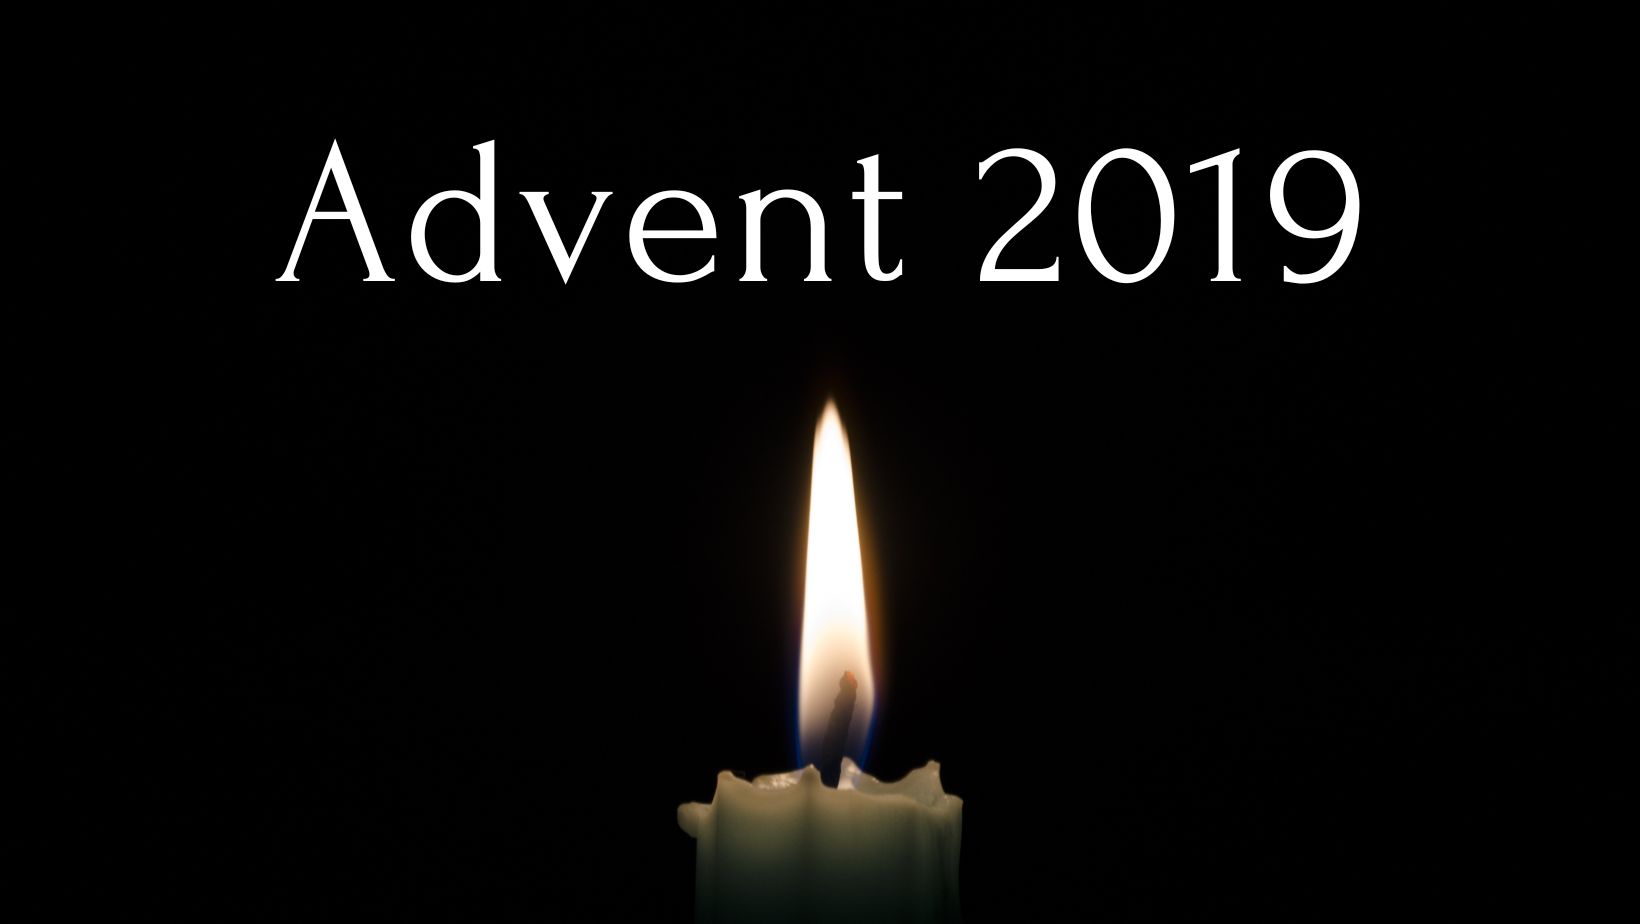 Advent 2019 banner